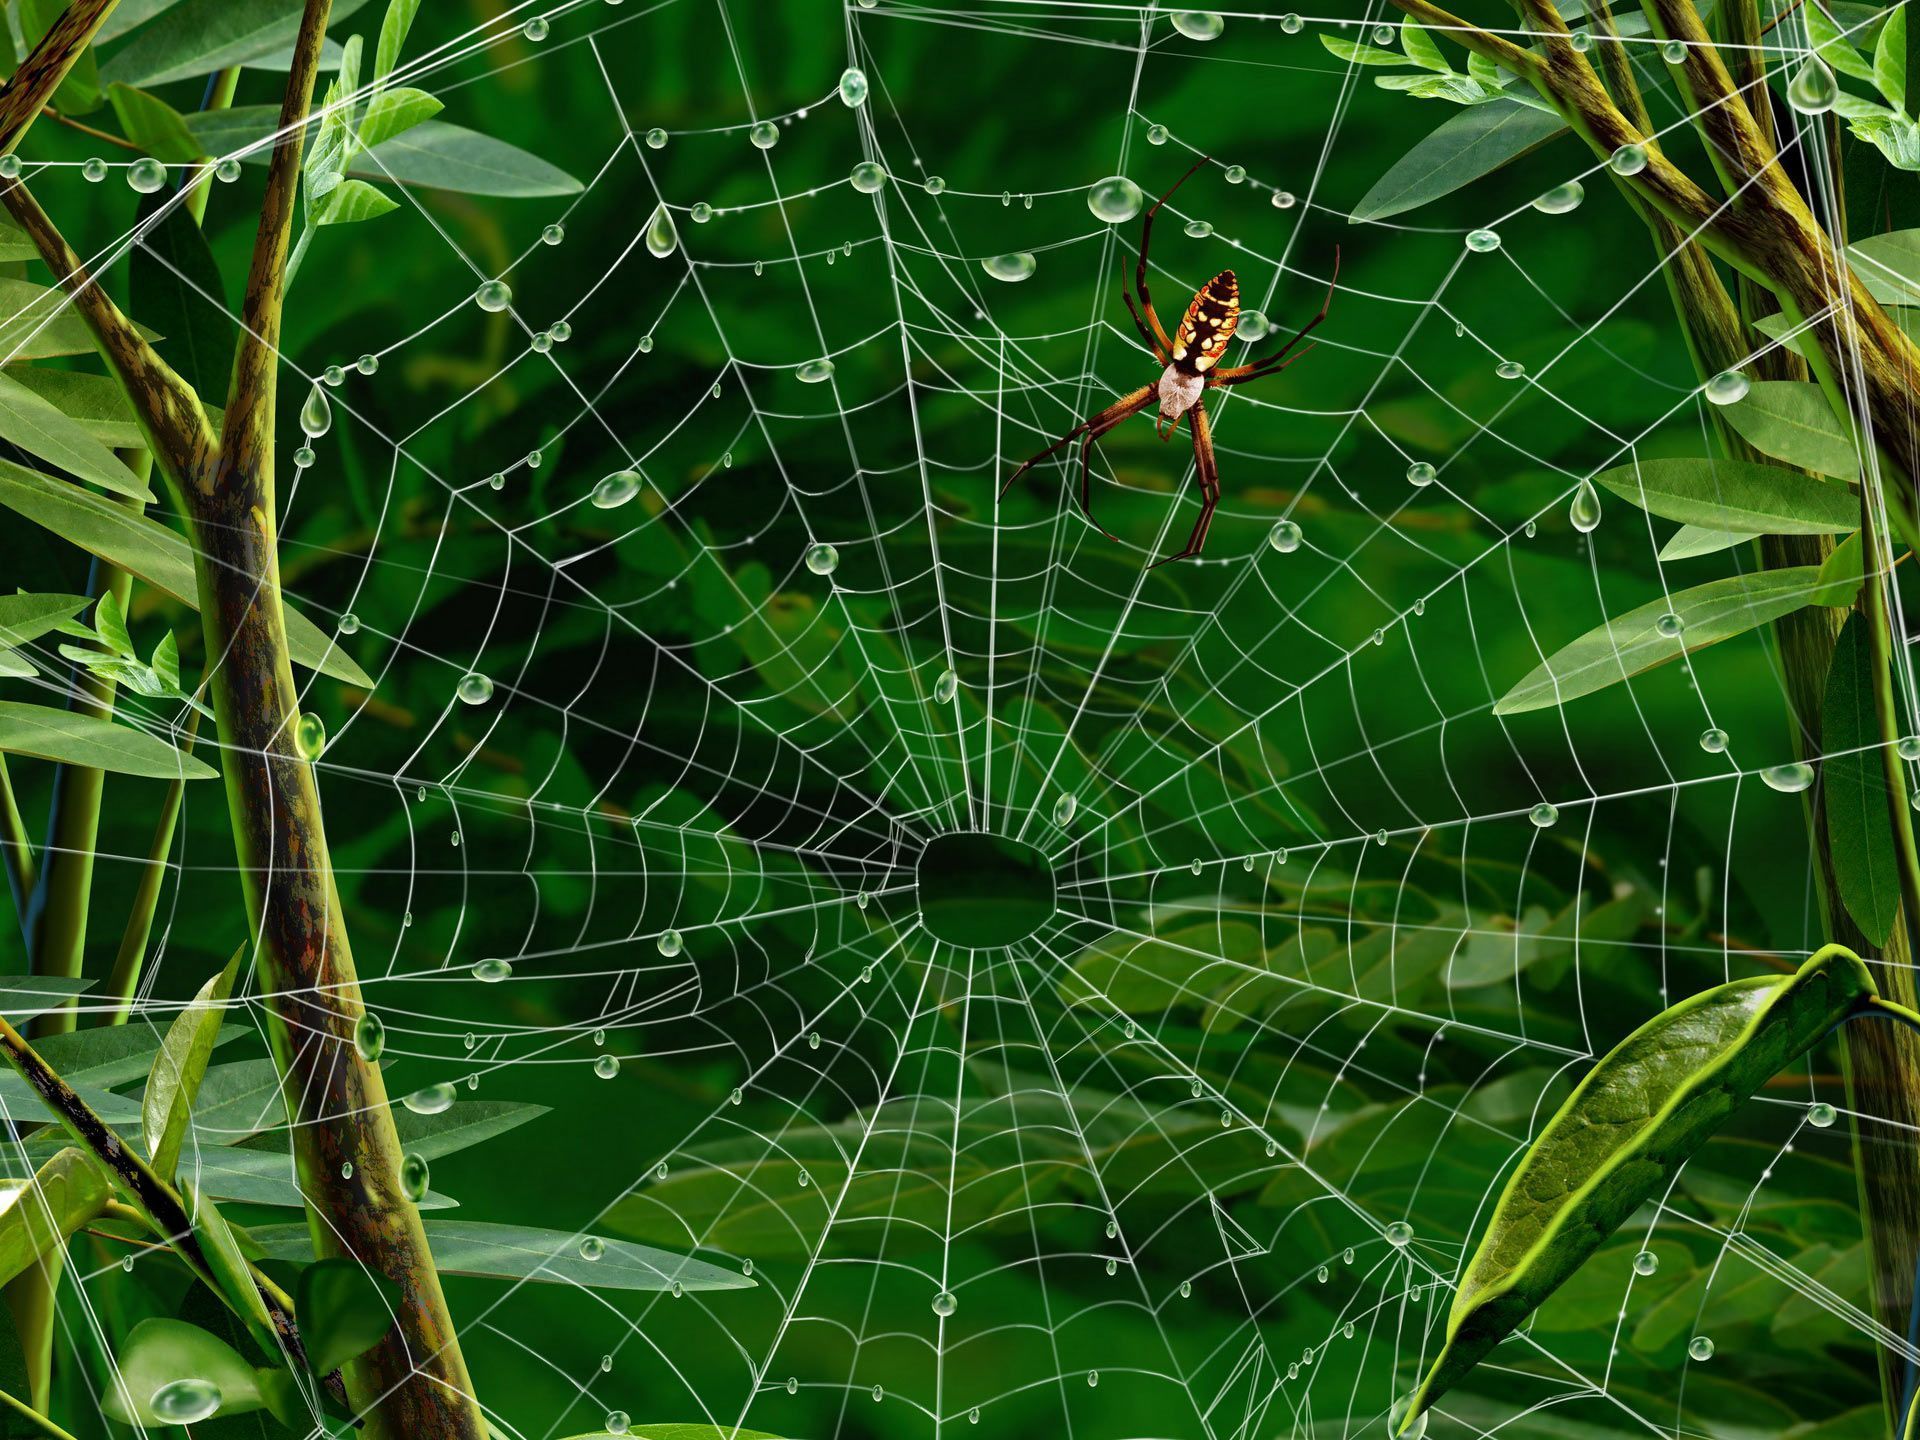 Desktop Wallpaper · Gallery · Windows 7 · Exotic spider | Free ...